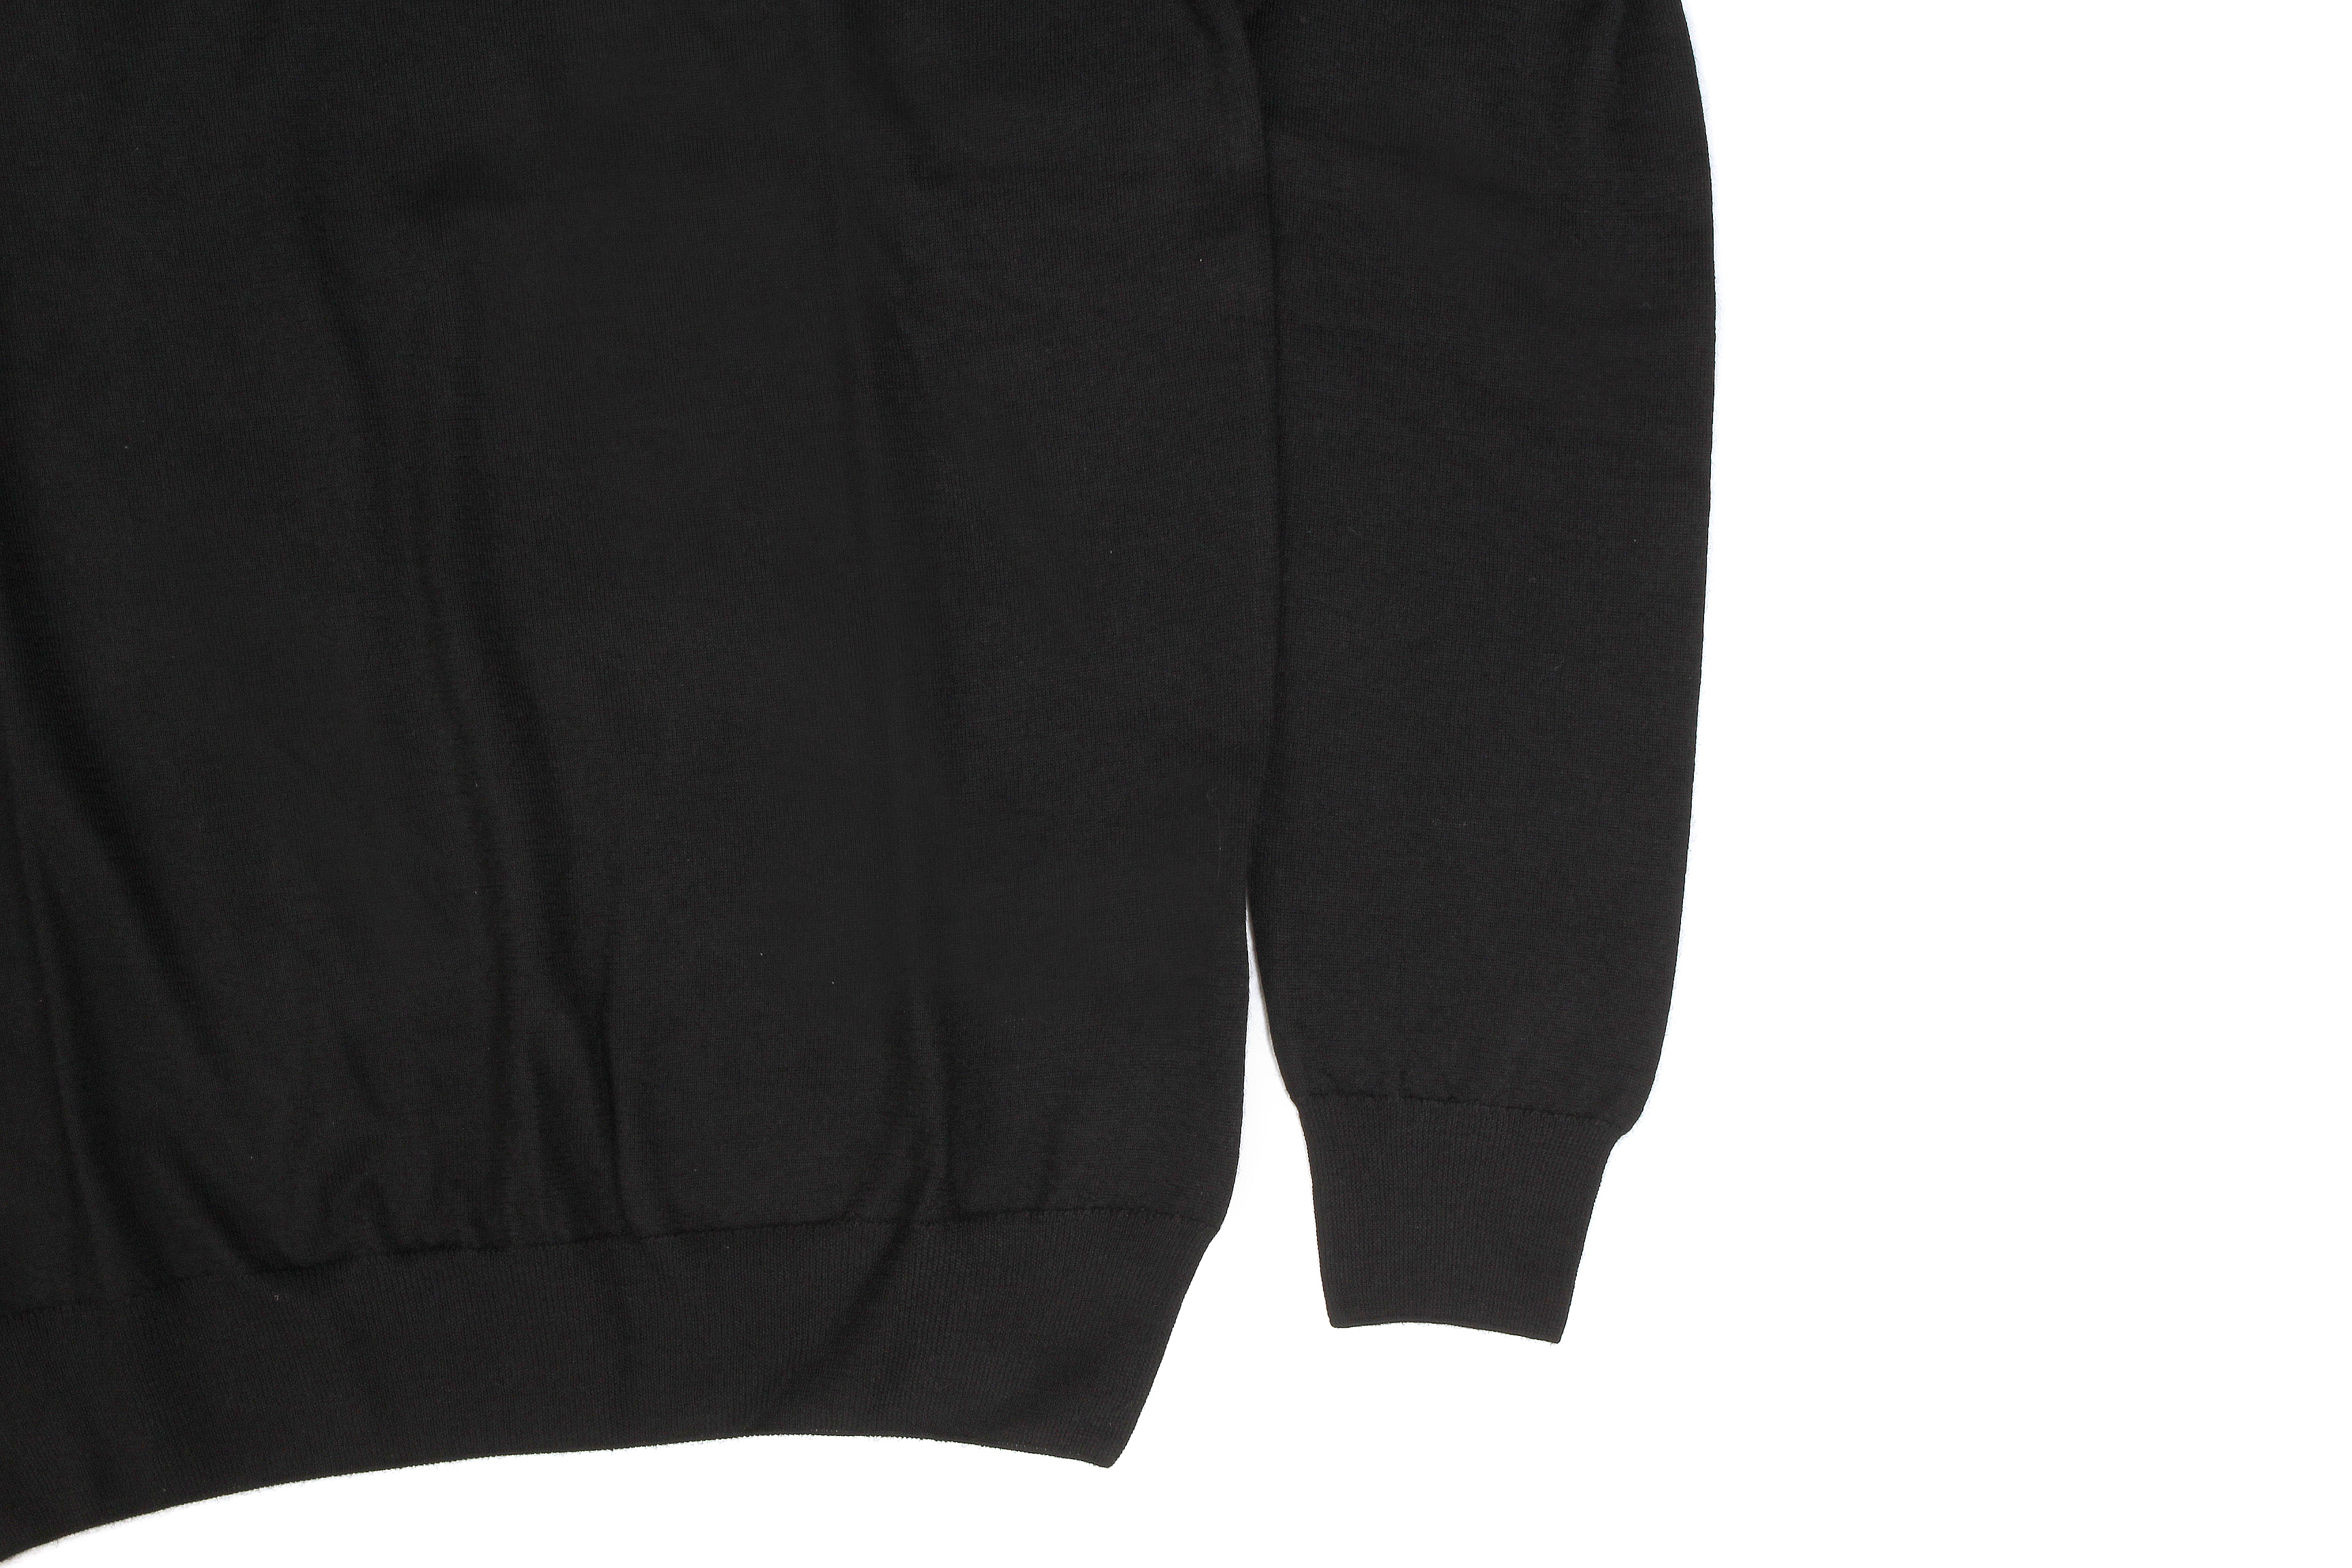 FEDELI (フェデリ) Silk Cashmere Crew Neck Sweater シルクカシミア クルーネック セーター BLACK (ブラック・9)made in italy (イタリア製) 2021 秋冬新作 【入荷しました】【フリー分発売開始】愛知 名古屋 Alto e Diritto altoediritto アルトエデリット シルカシニット